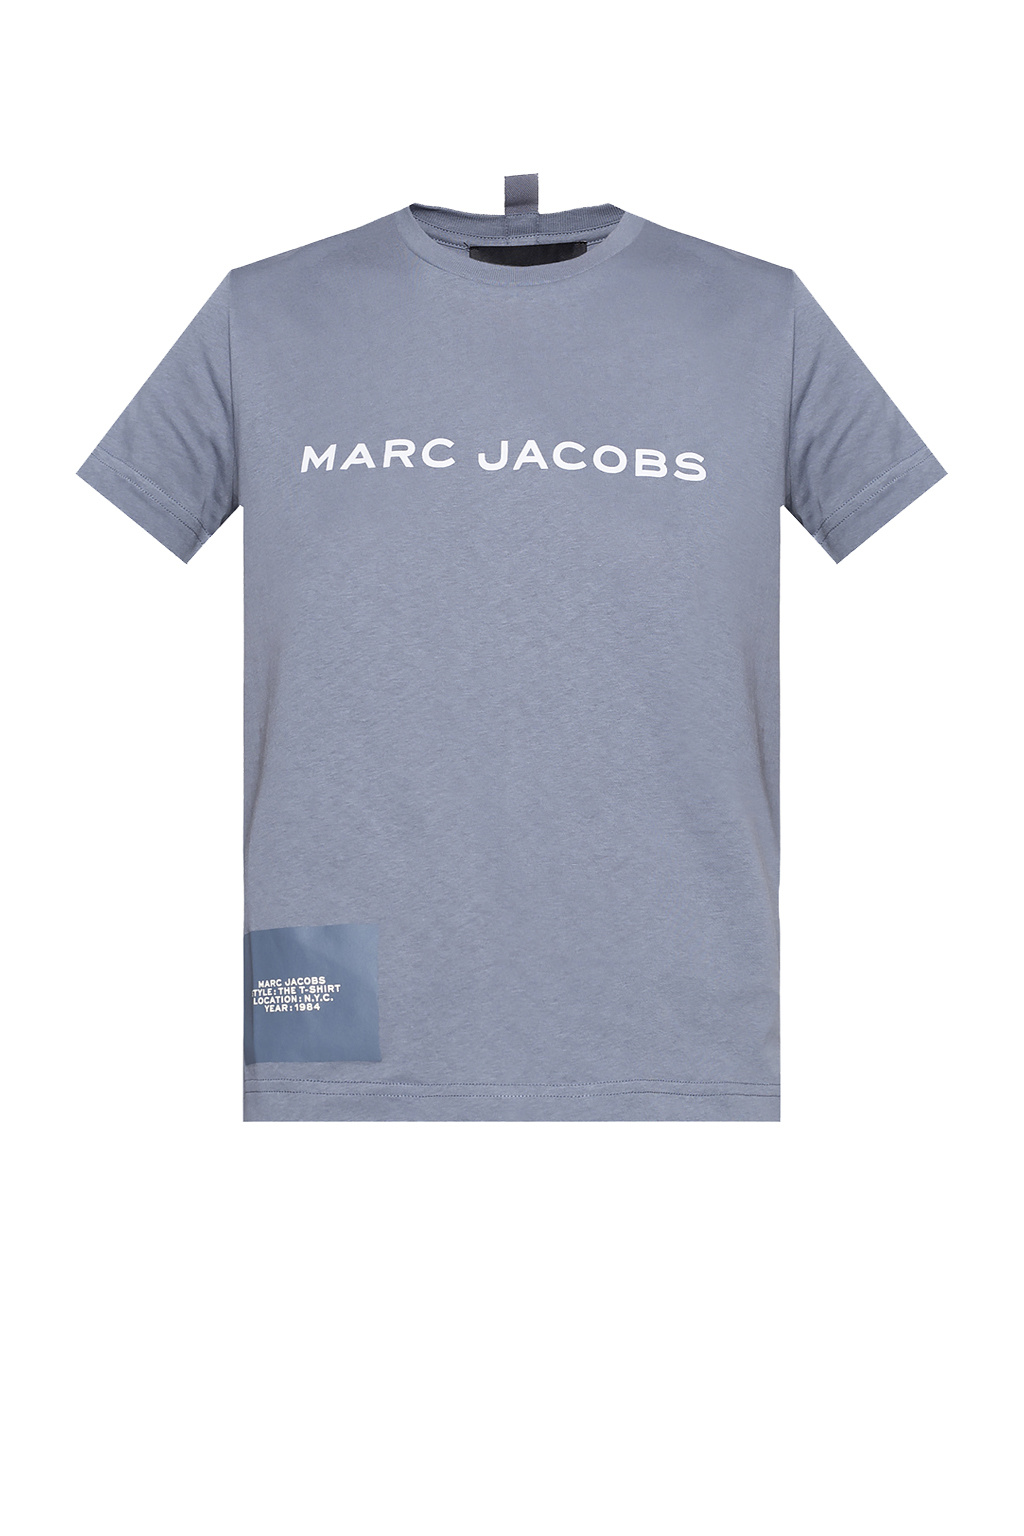 Marc Jacobs marc jacobs stud earrings